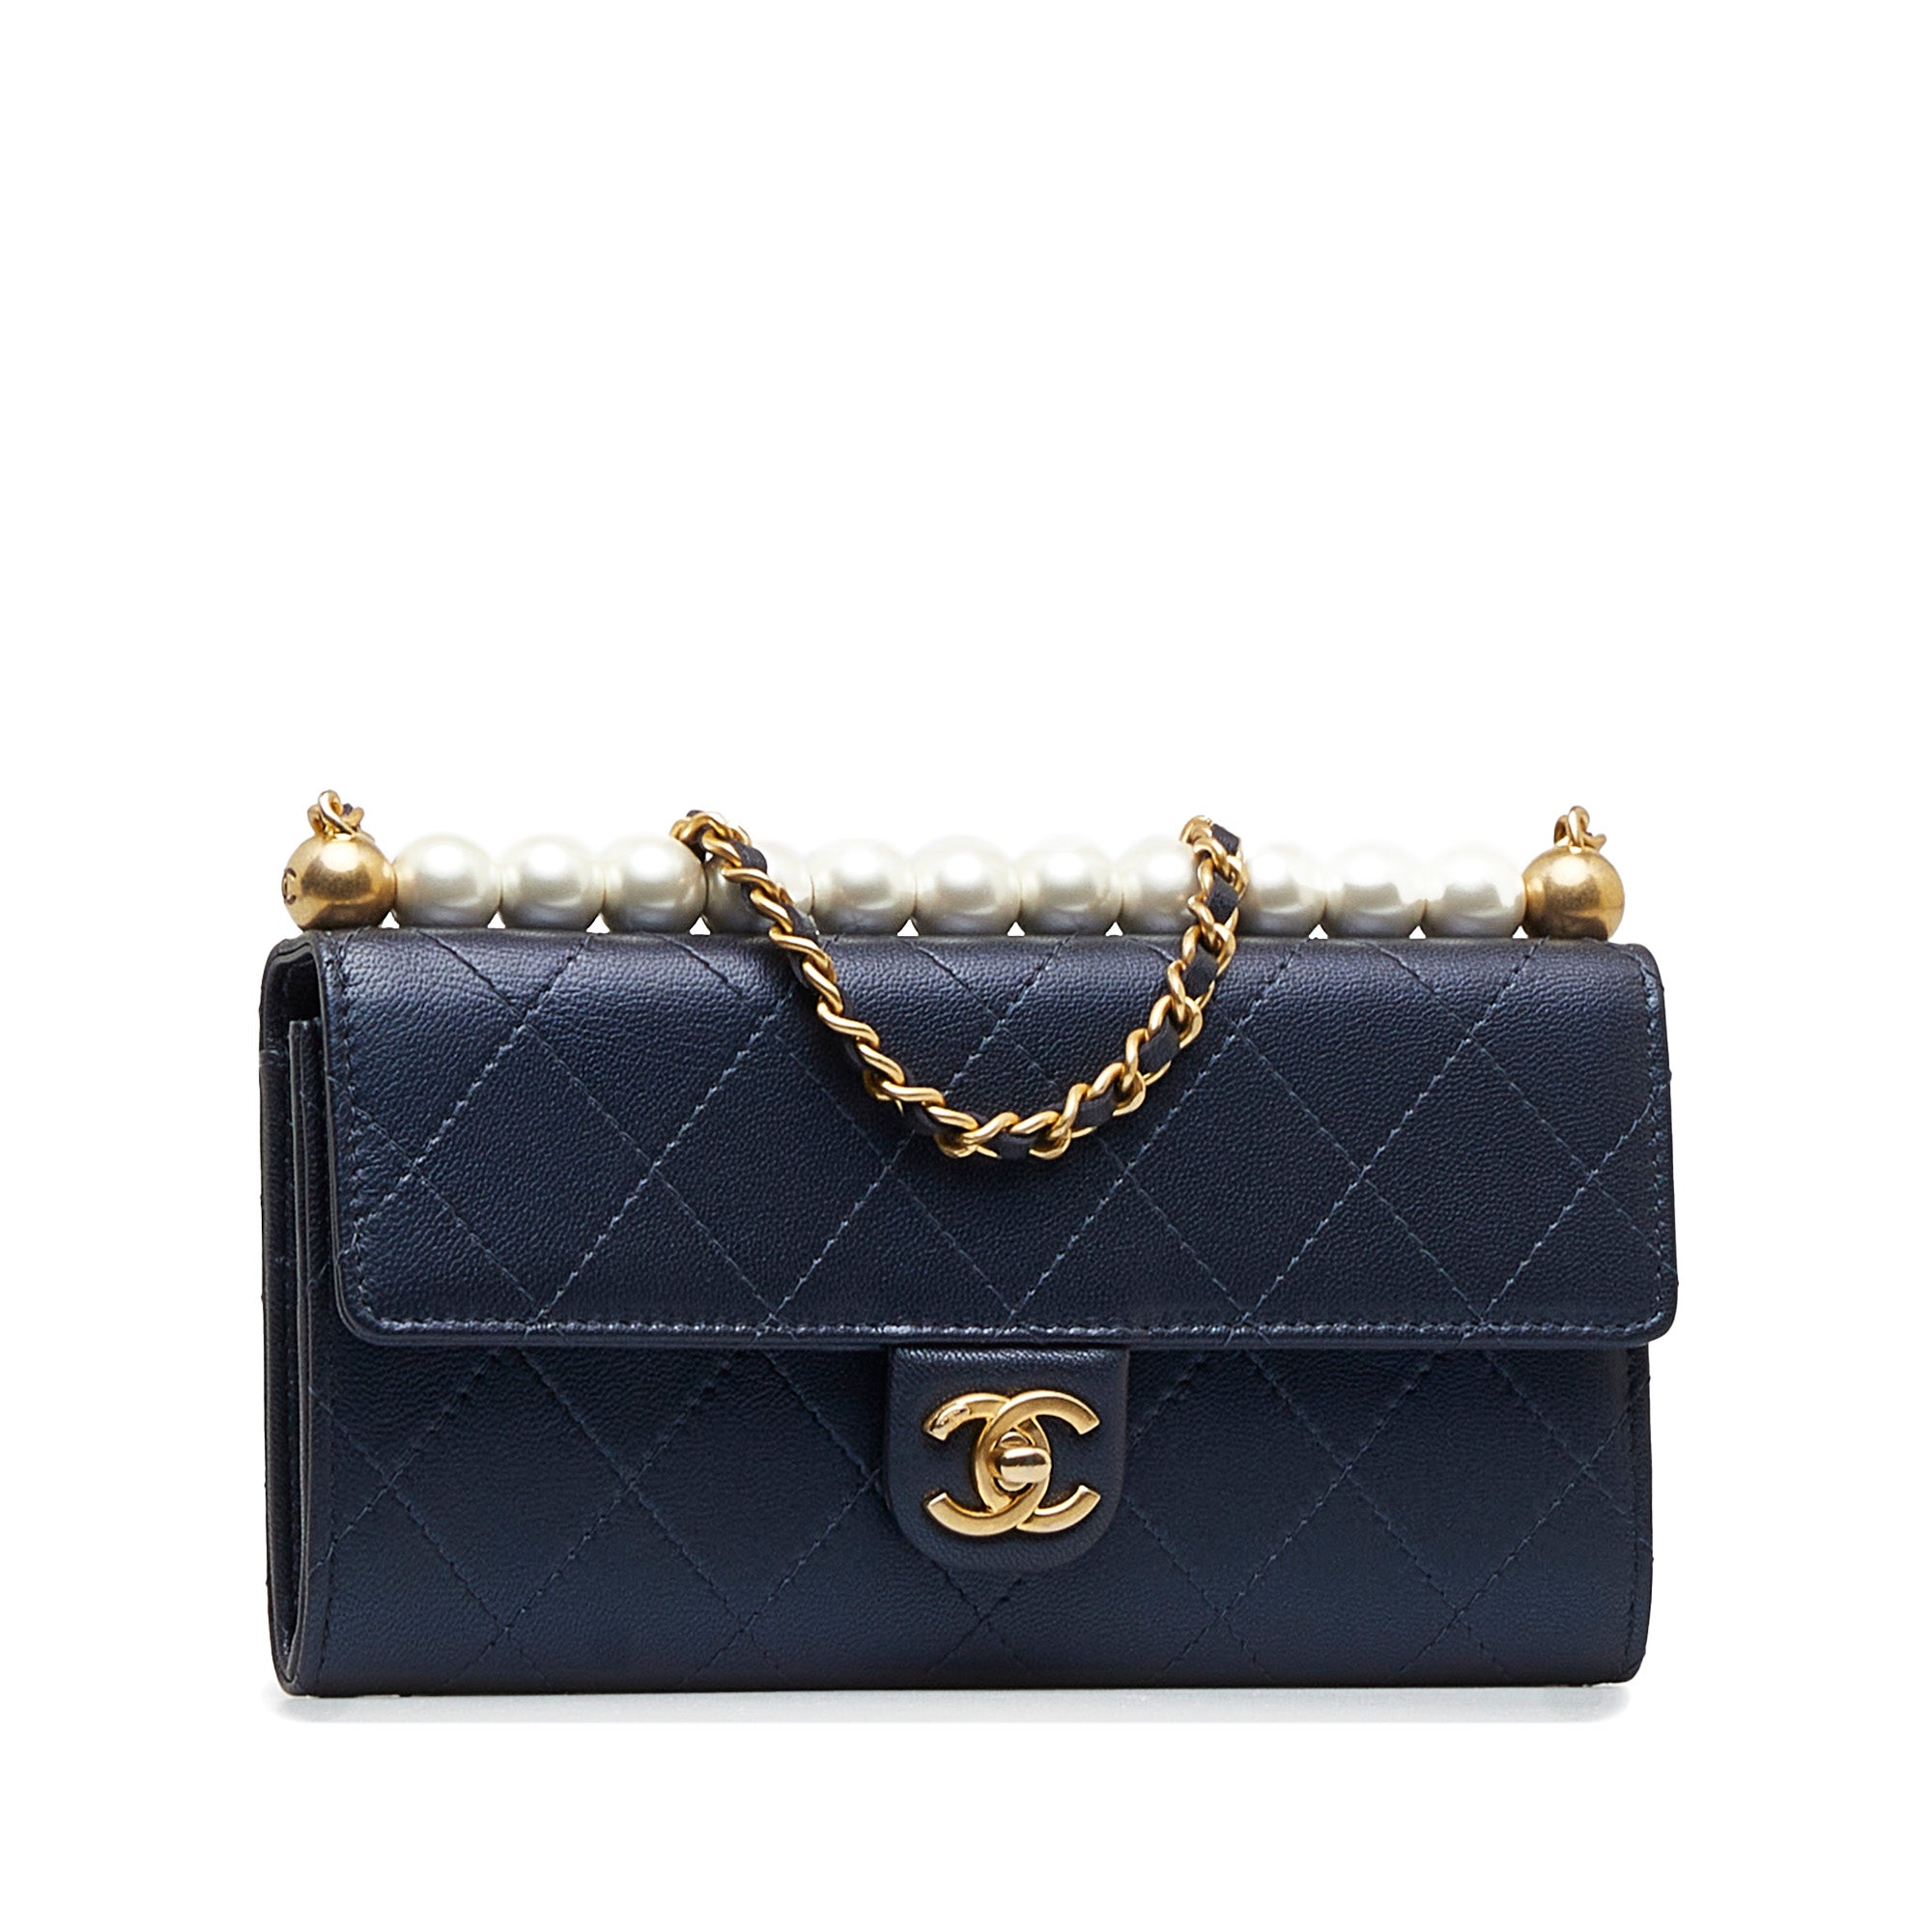 Blue Chanel Goatskin Chic Pearls Clutch With Chain Crossbody Bag